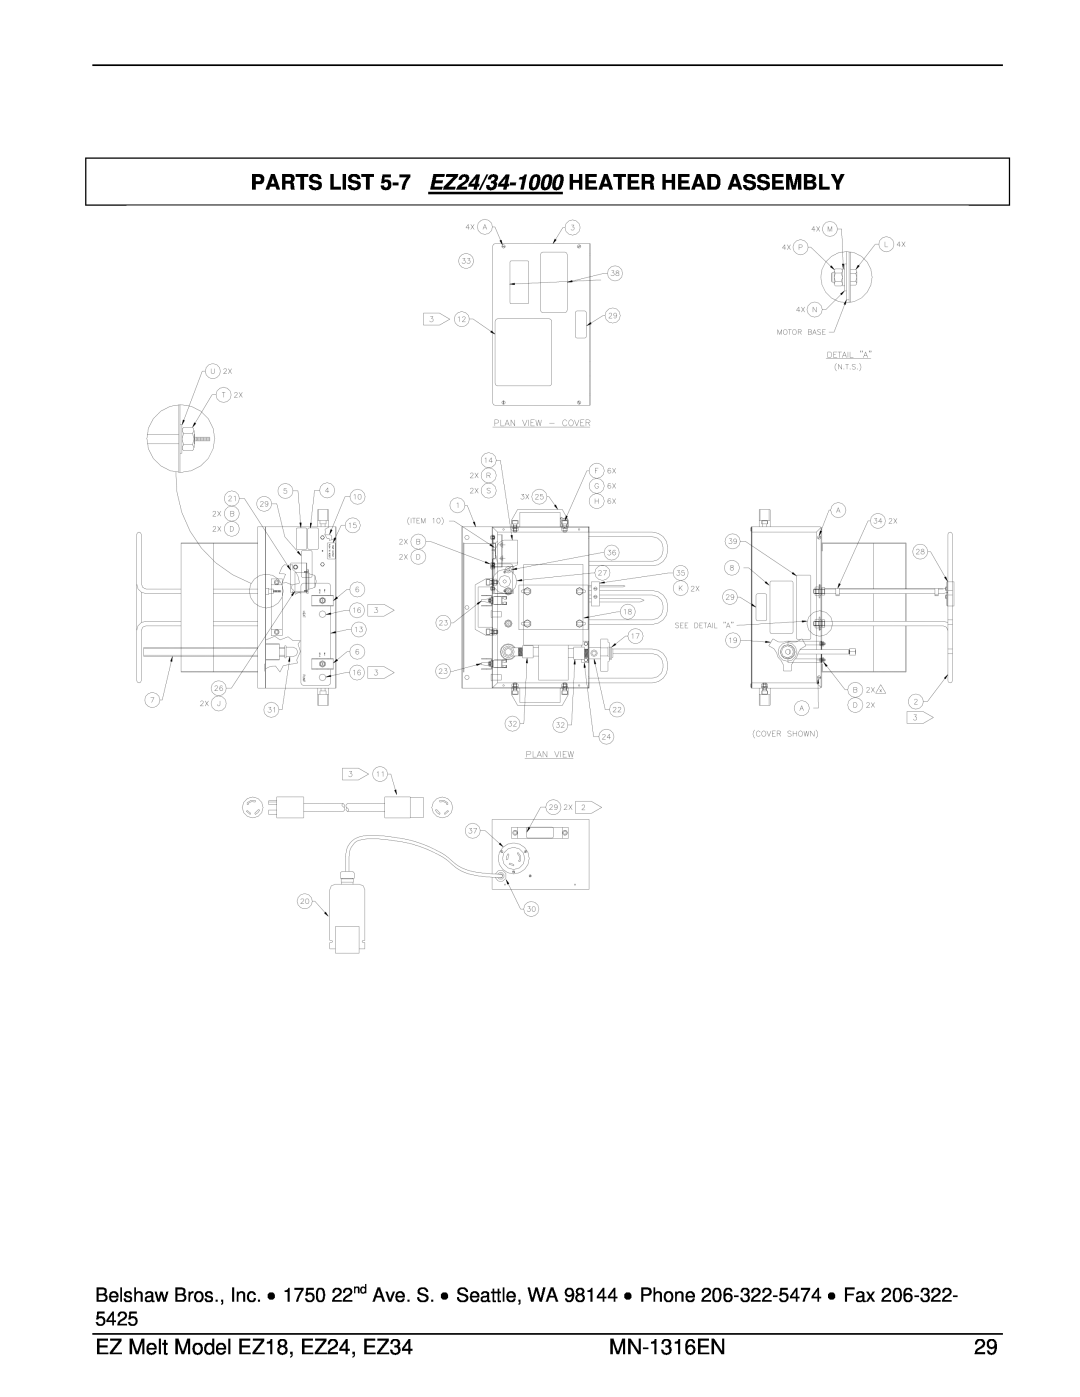 Belshaw Brothers manual PARTS LIST 5-7 EZ24/34-1000HEATER HEAD ASSEMBLY, EZ Melt Model EZ18, EZ24, EZ34, MN-1316EN 